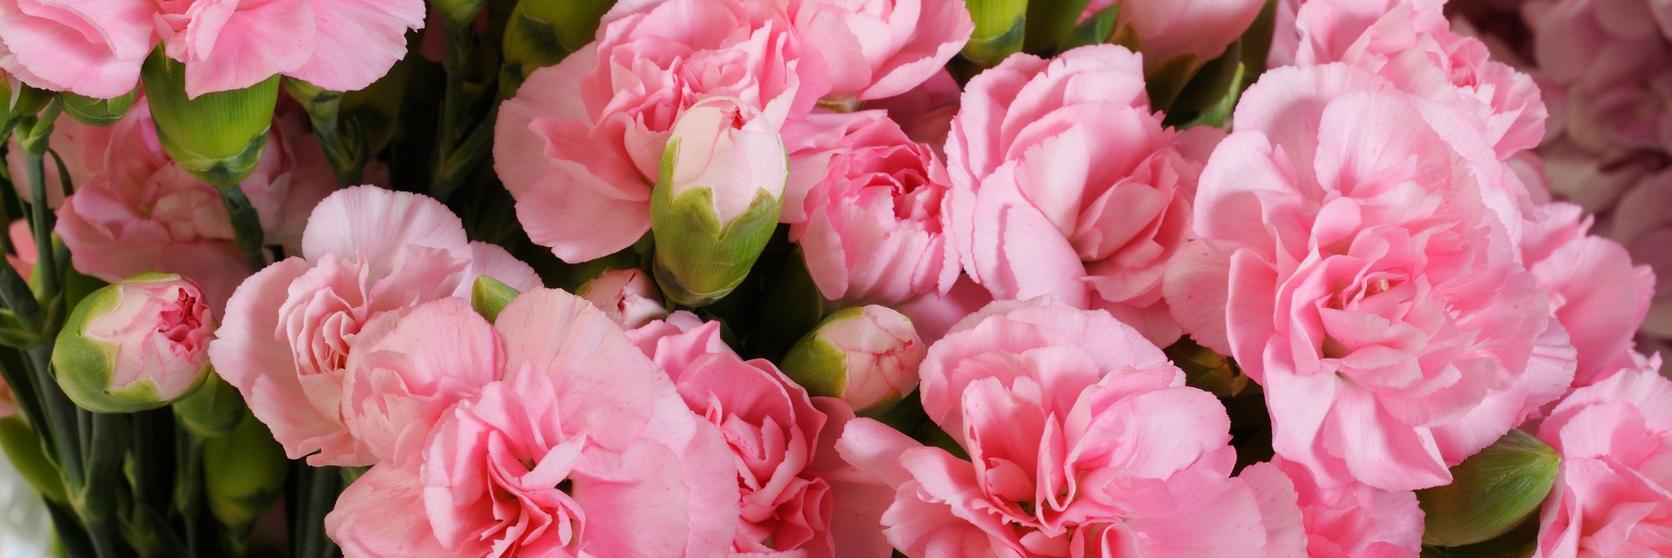 ff_pink_carnations